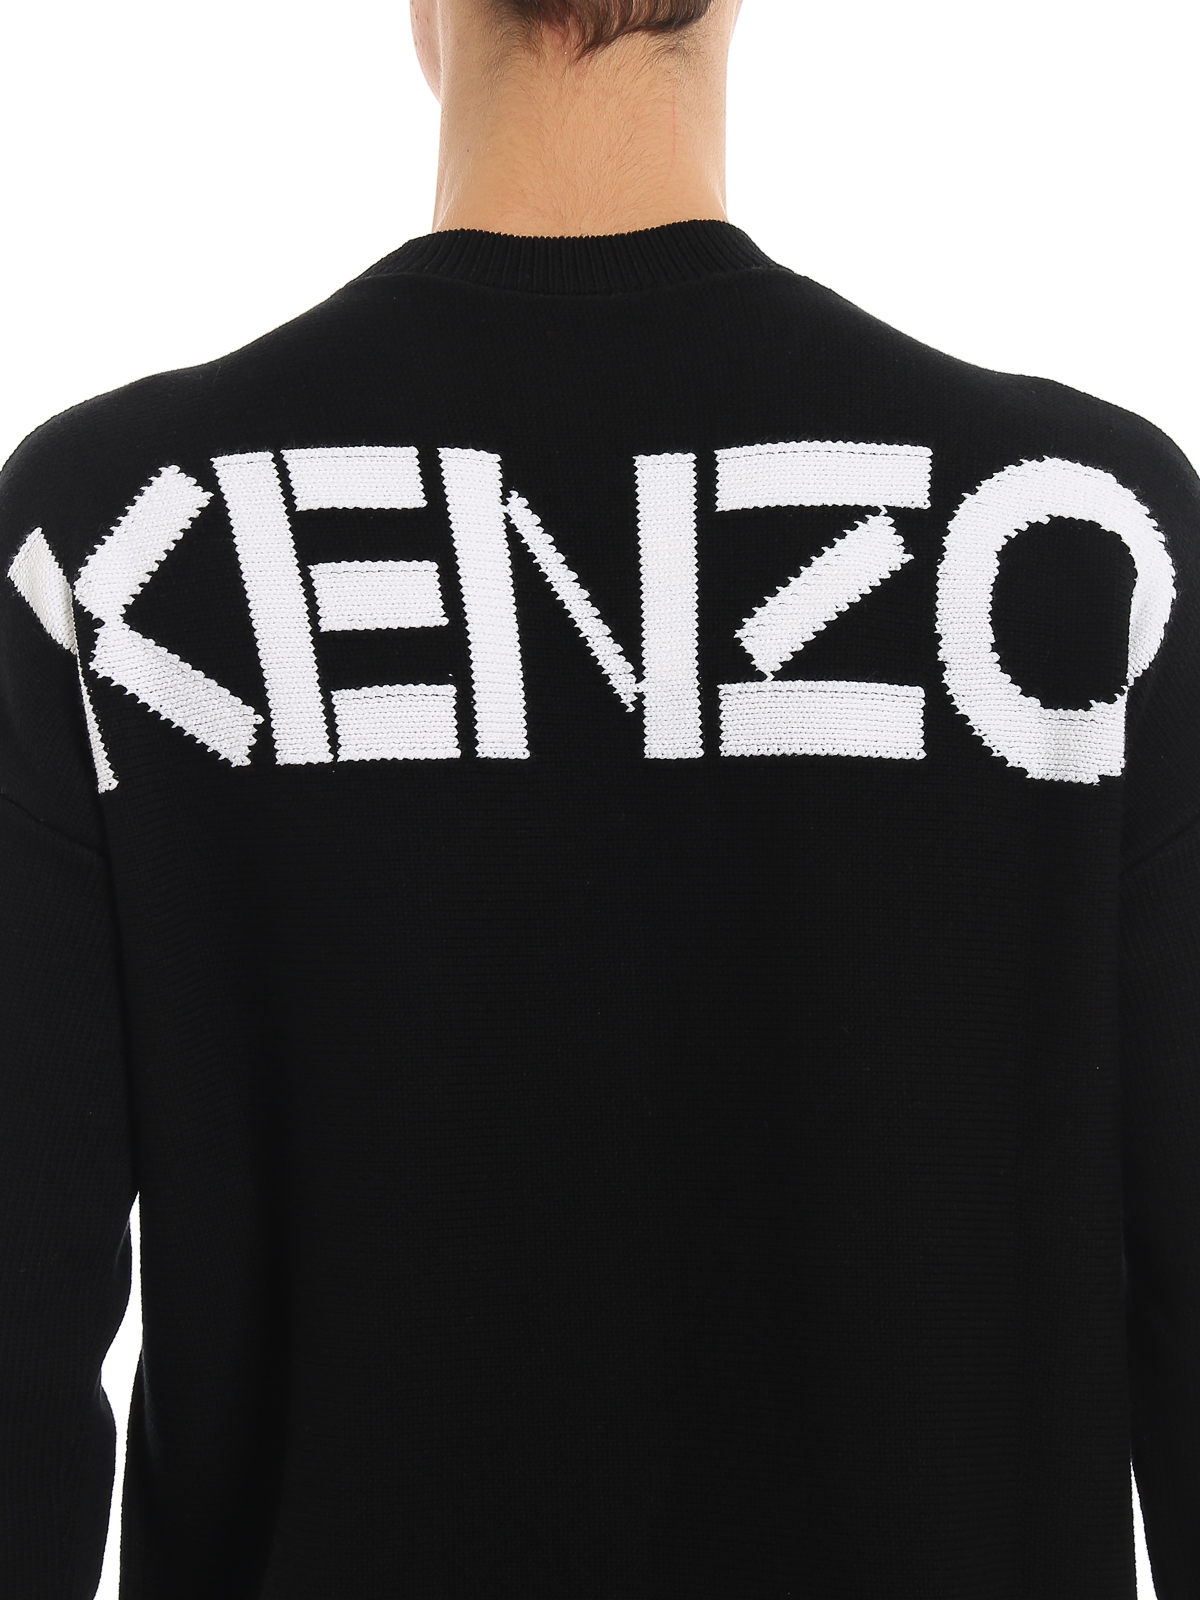 kenzo black sweater